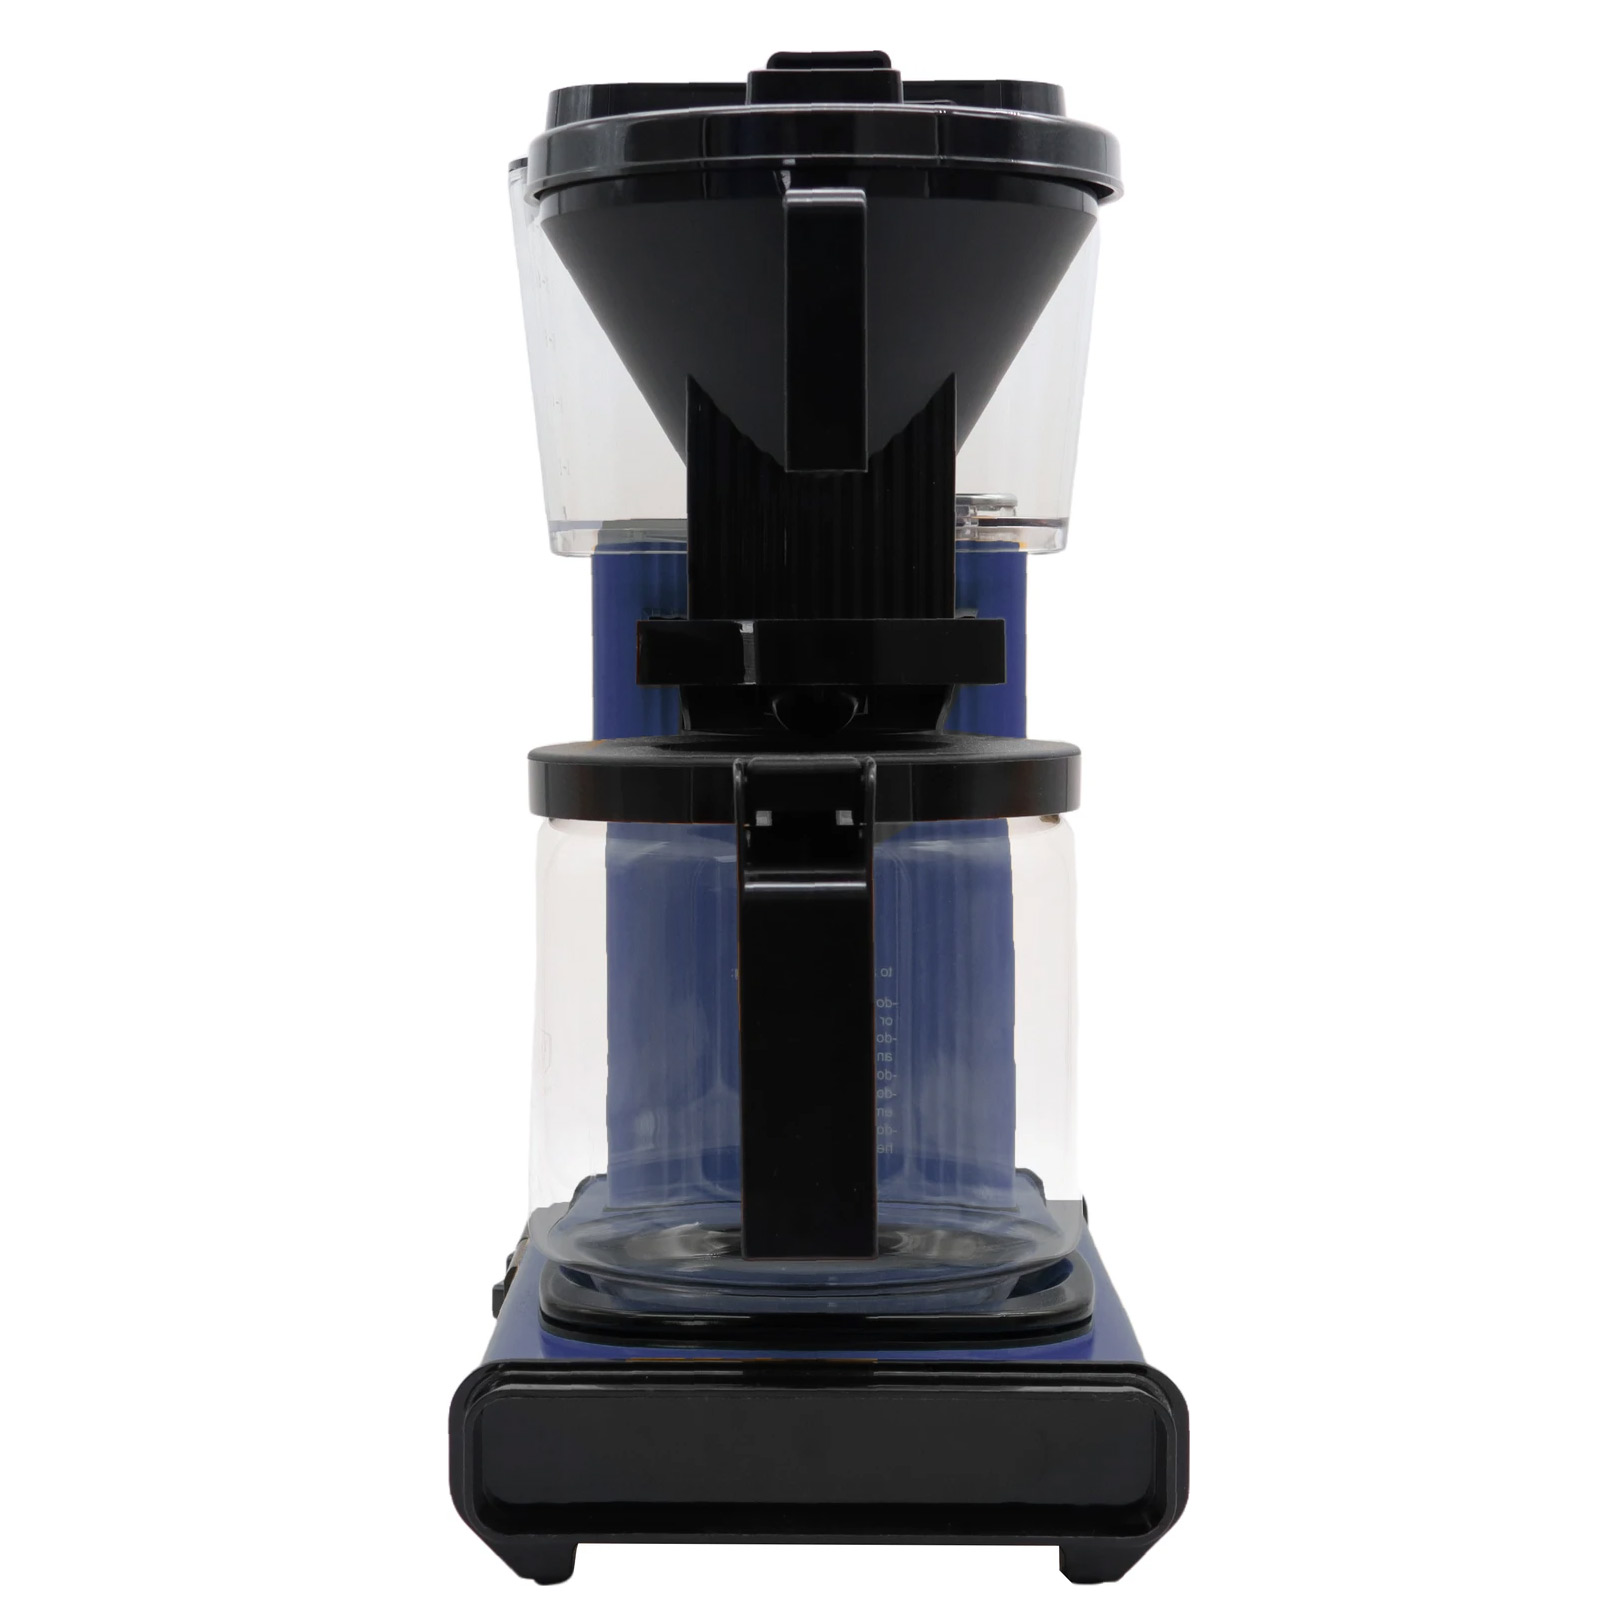 Technivorm Moccamaster KBGV Select Brewer Glass Carafe Midnight Blue - 53928